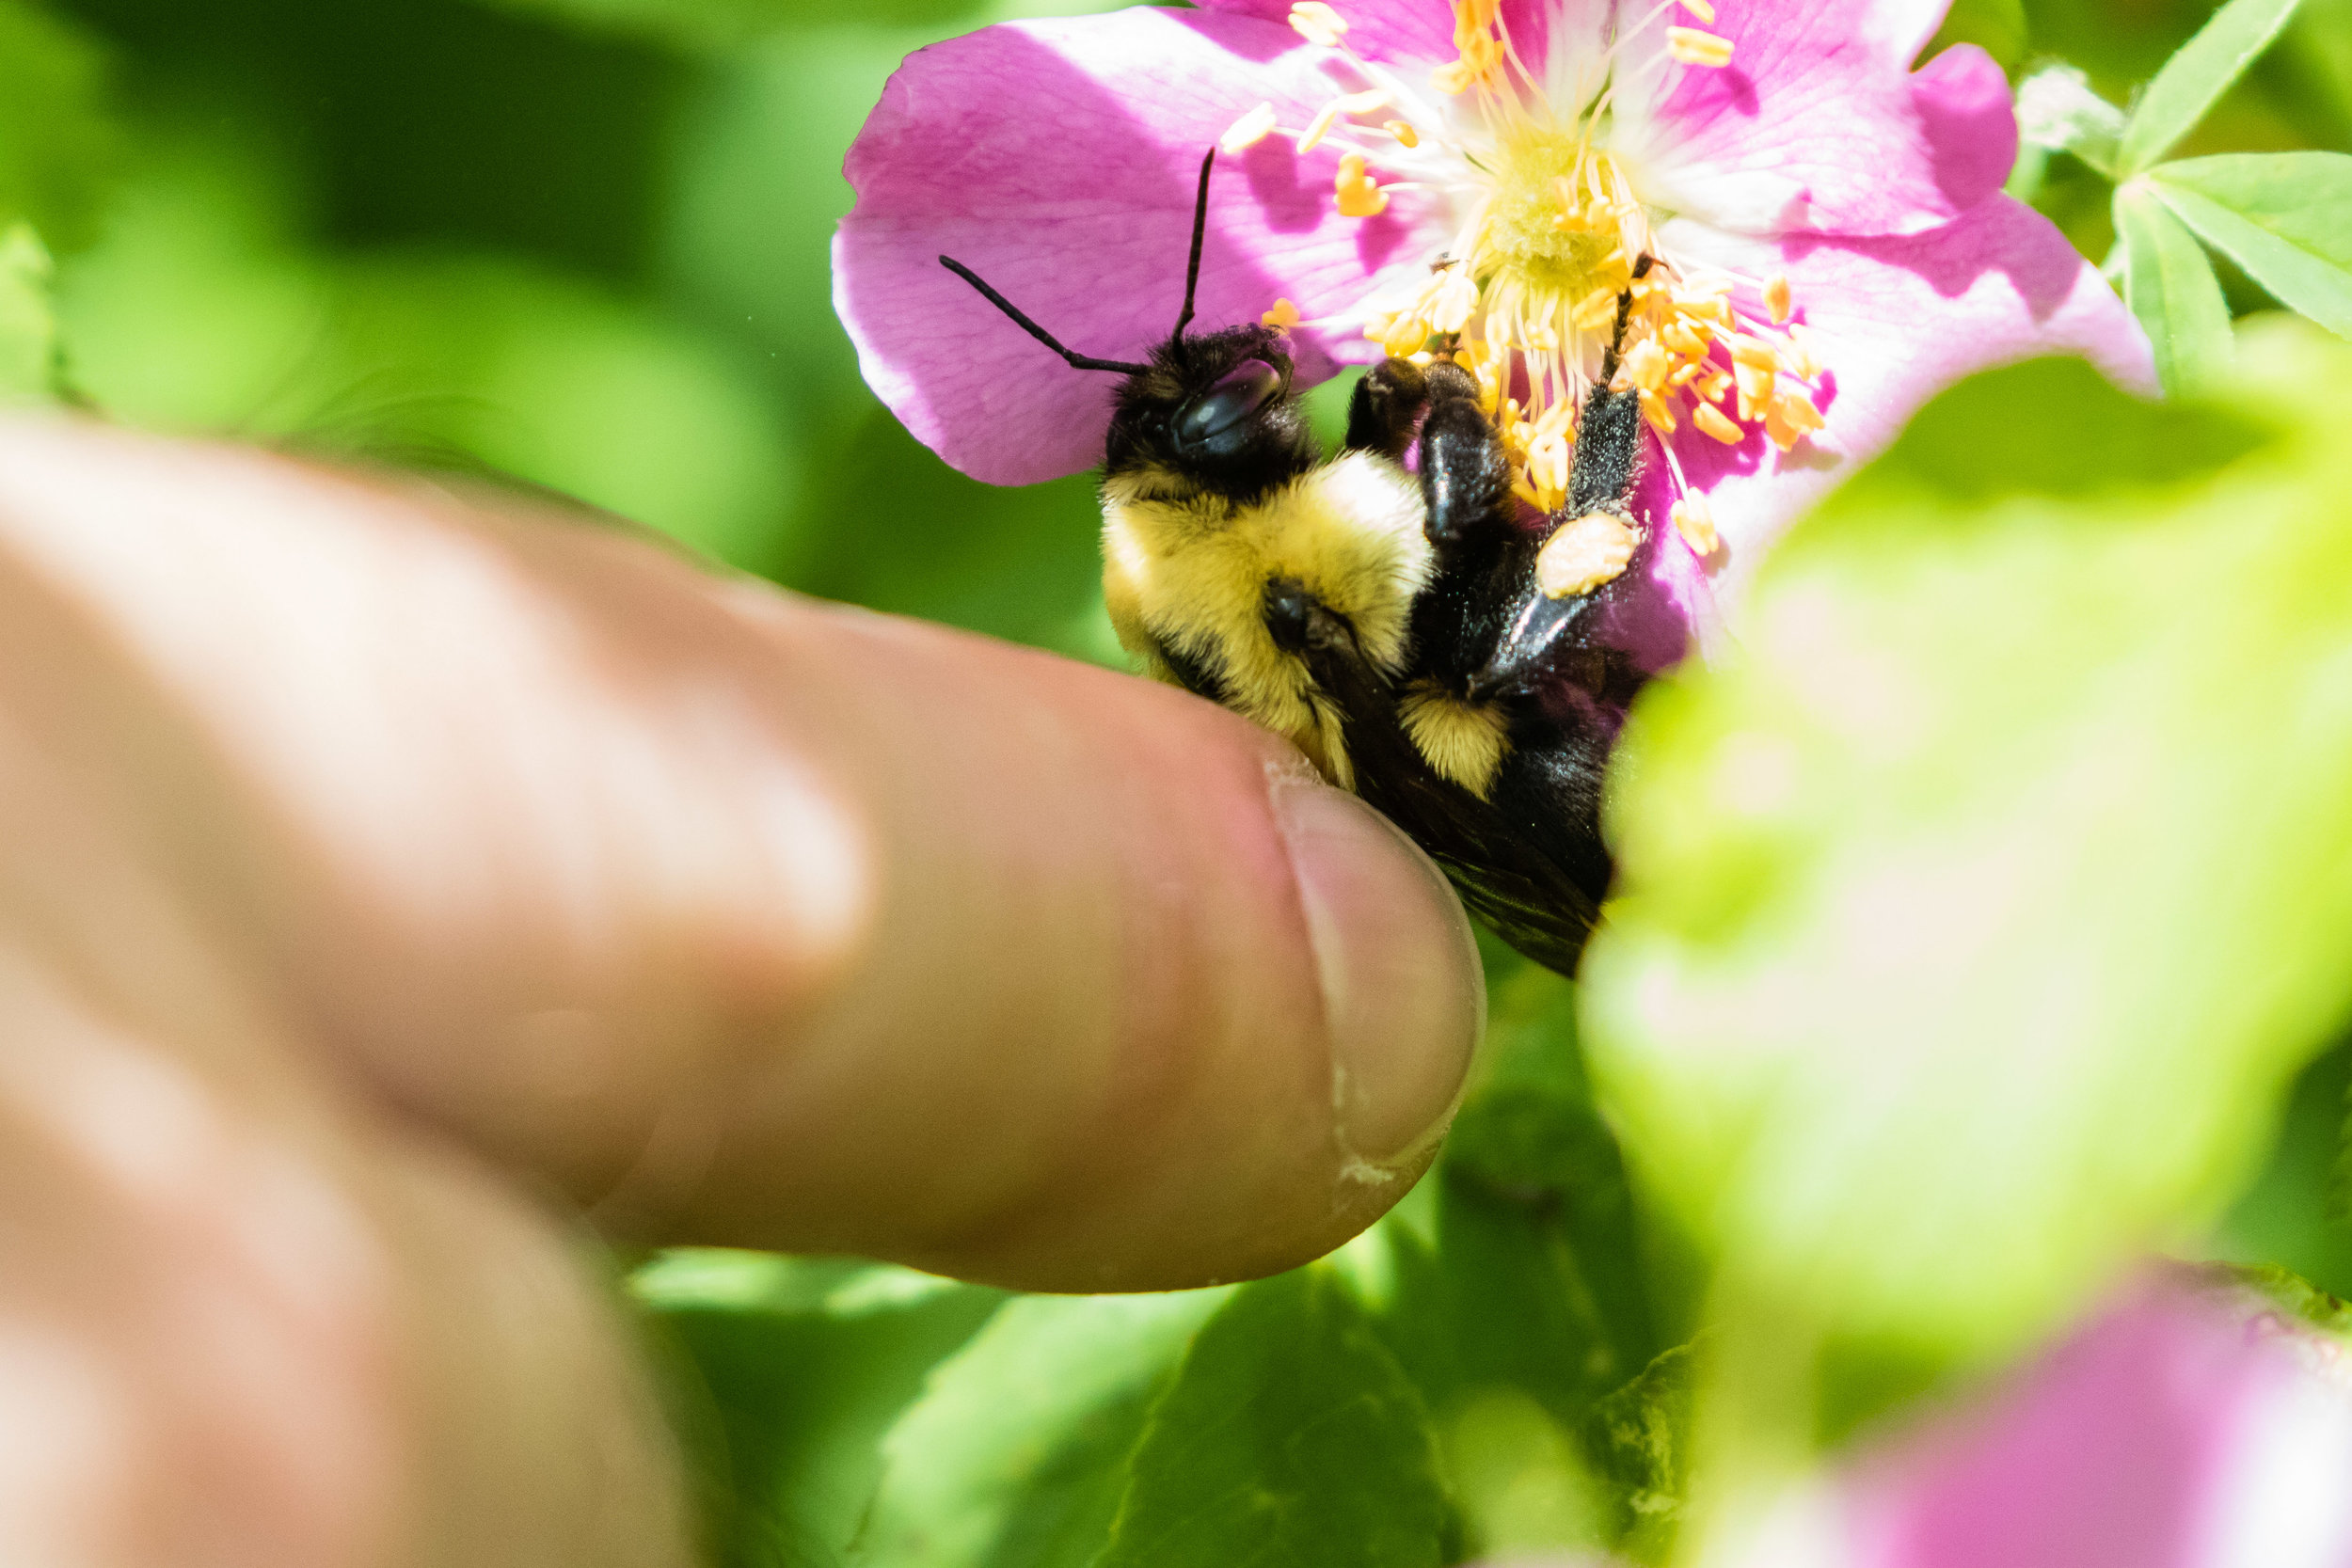 Petting a Bumblebee